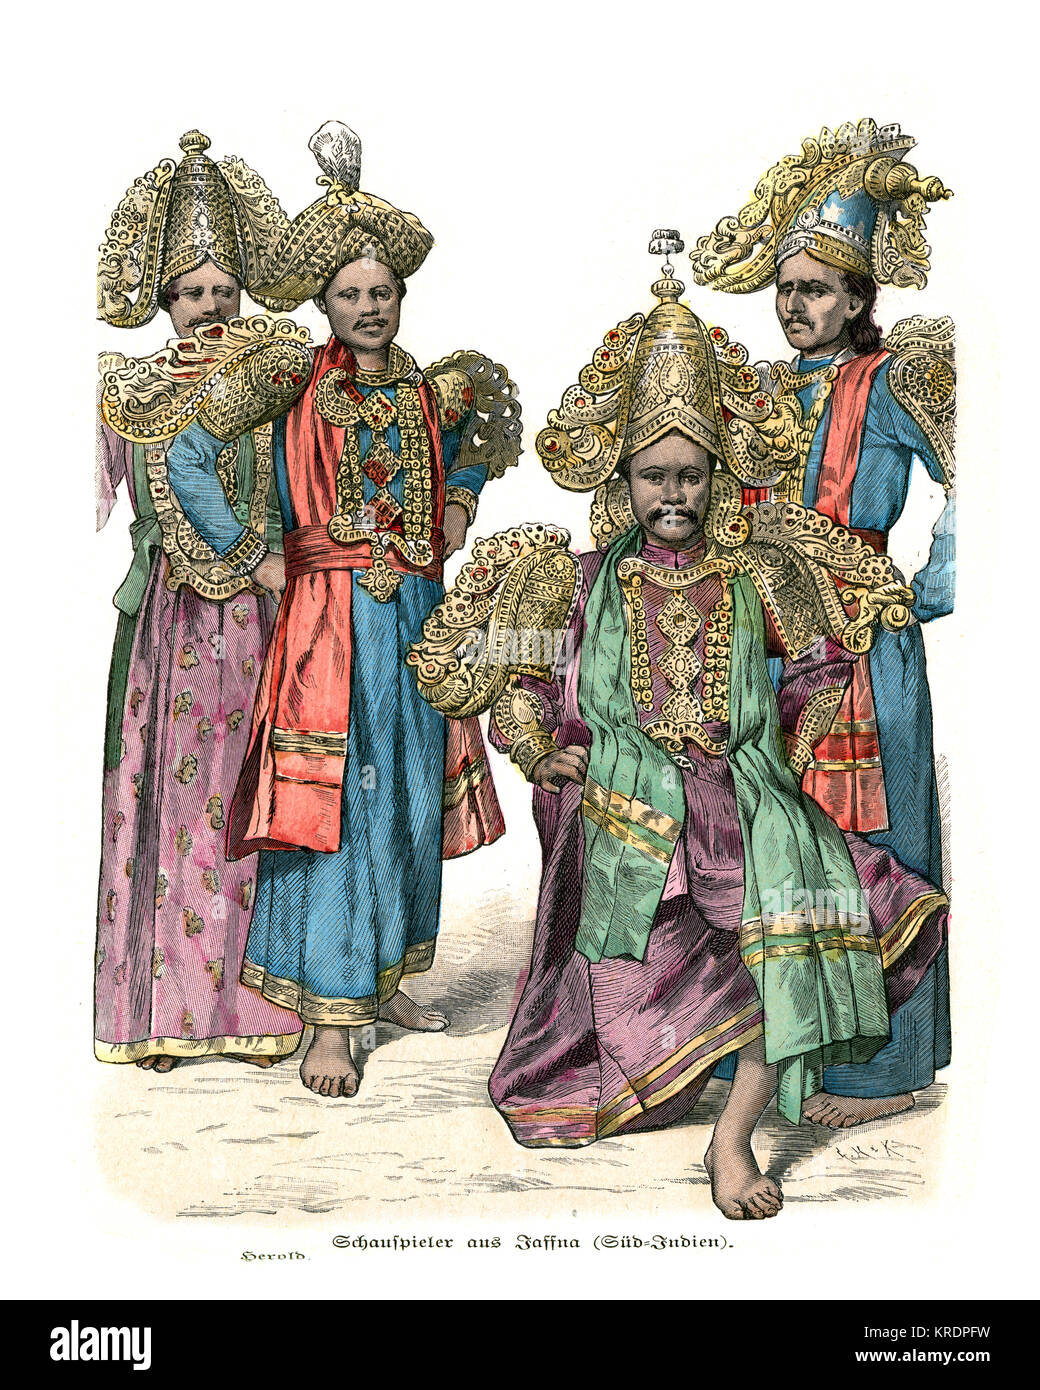 Vintage engraving of Traditional costumesof India, 19th Century. Actors of Jaffna, Sri Lanka. Stock Photo